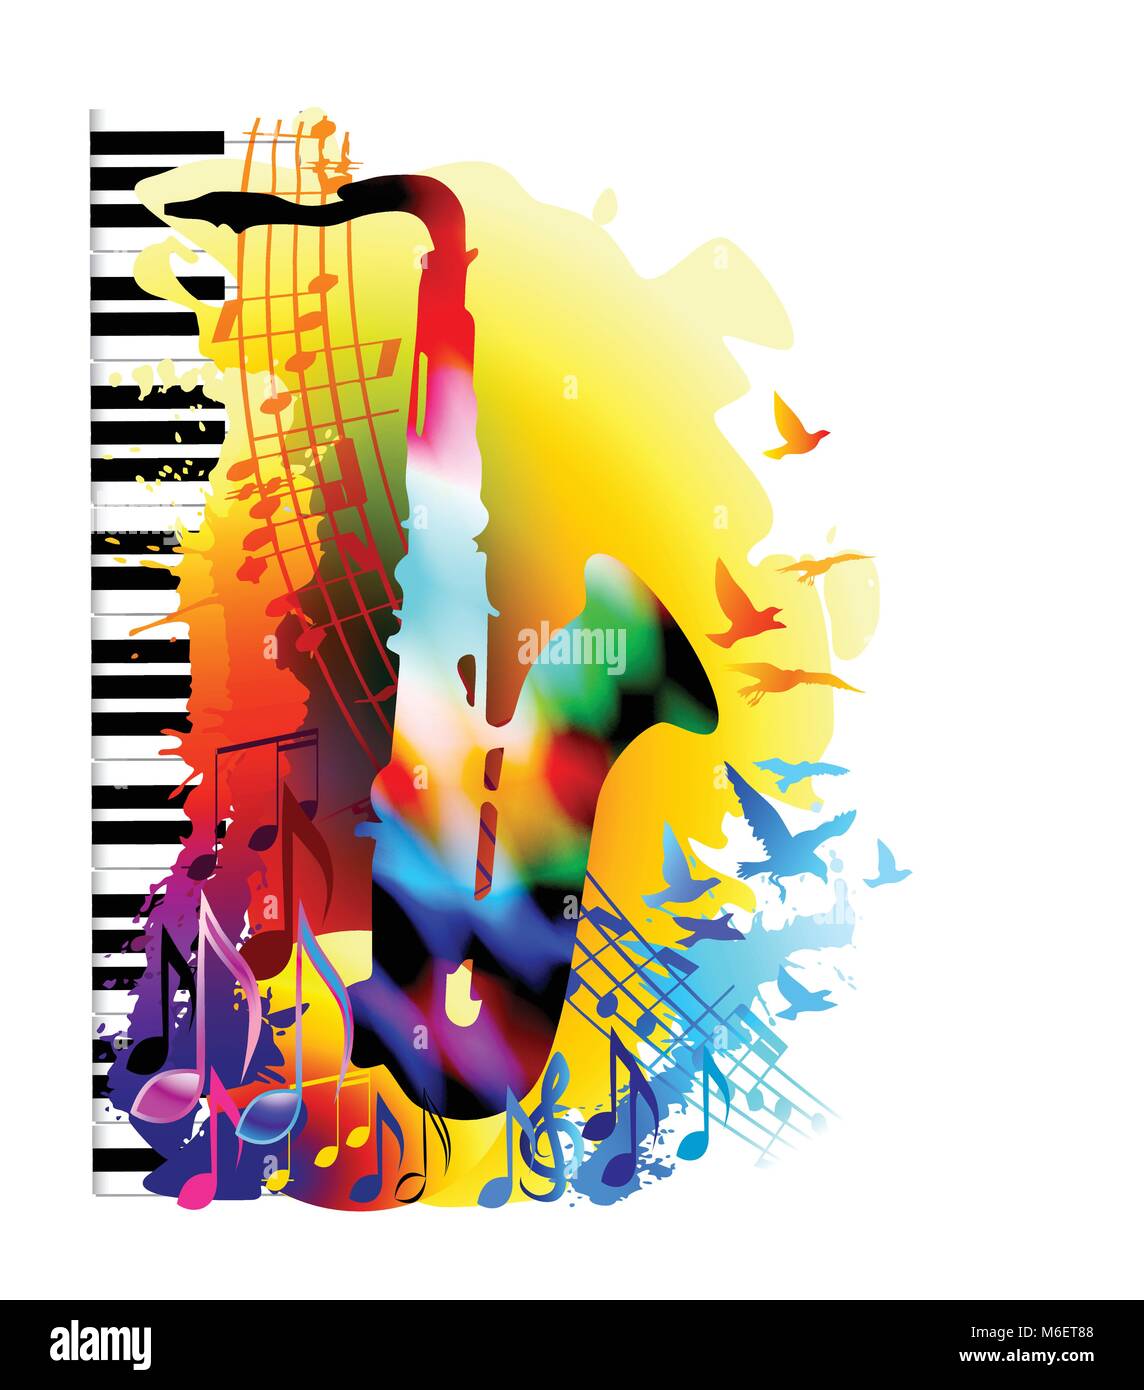 Musik Festival Hintergrund mit Saxophon und Noten. Bunte vektor Illustration. Digitale Malerei Stock Vektor